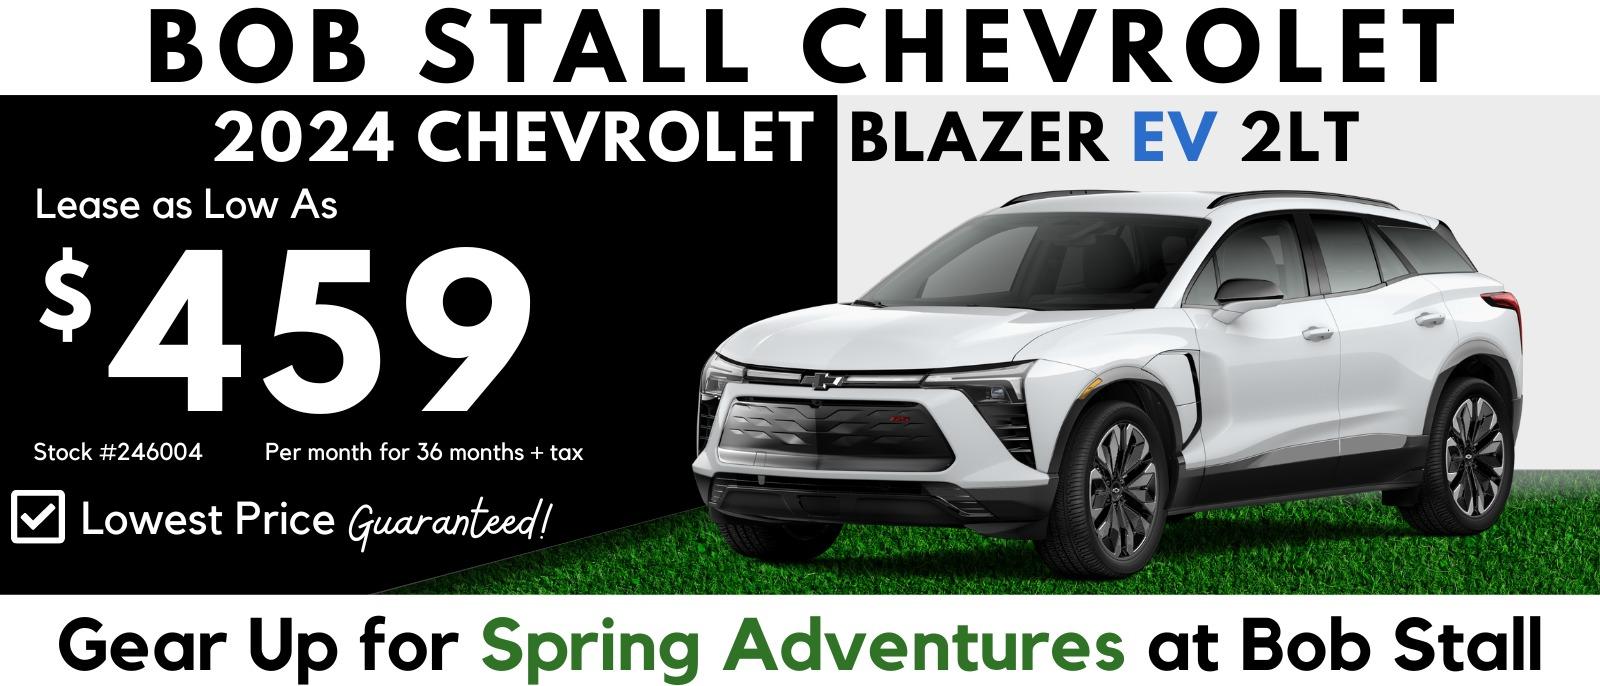 2024 Blazer EV Savings - Lease as low as $459 per month for 36 Months